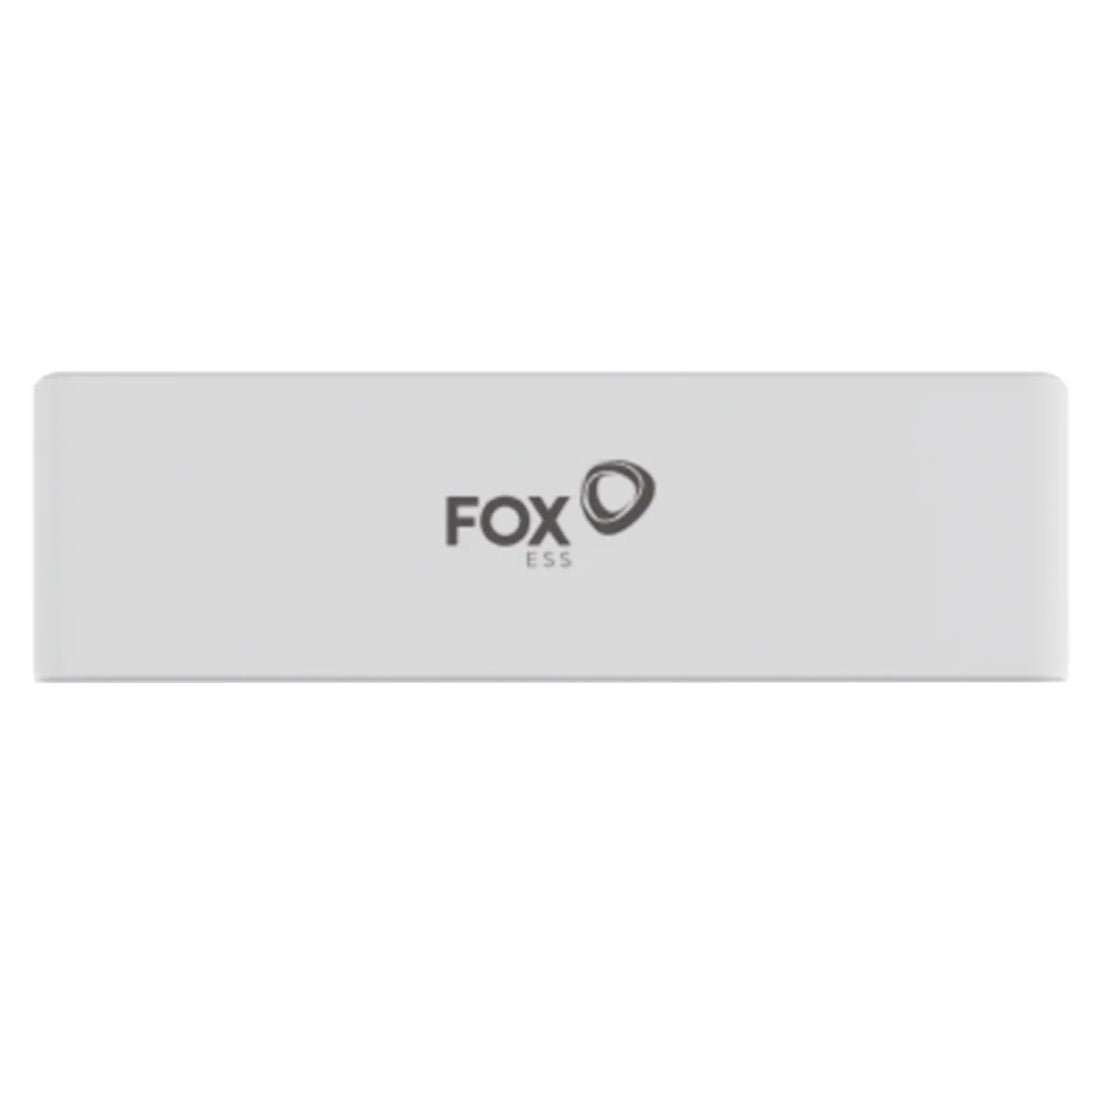 FOX-ESS ECS2900-H3 8.64kWh solar power storage